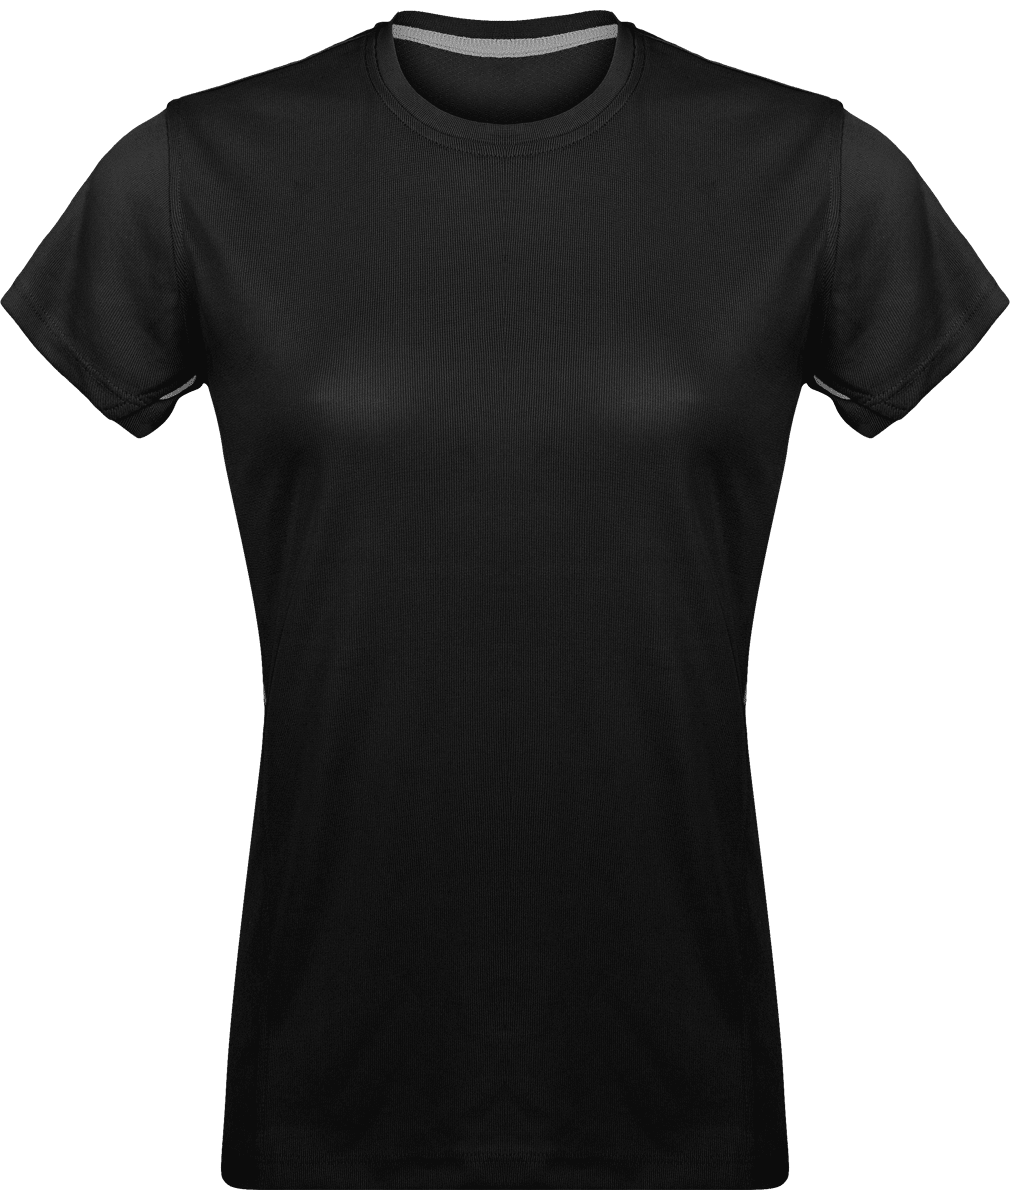 Camiseta Deporte Mujer | Ligera Y Transpirable | Black / Silver